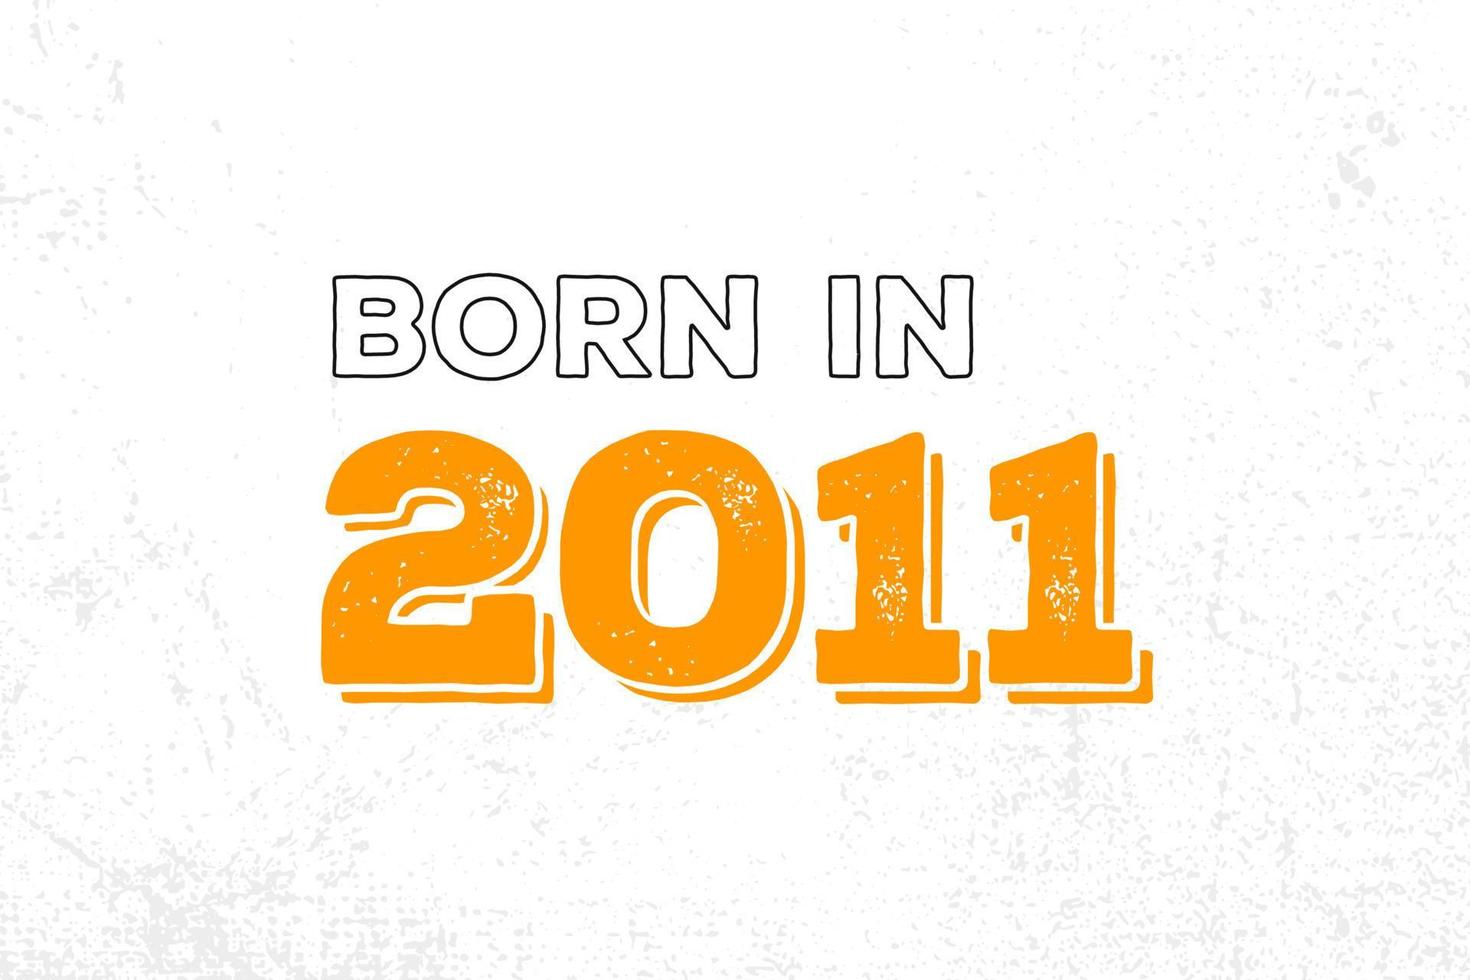 Born in 2011. Proud 2011 birthday gift tshirt design vector